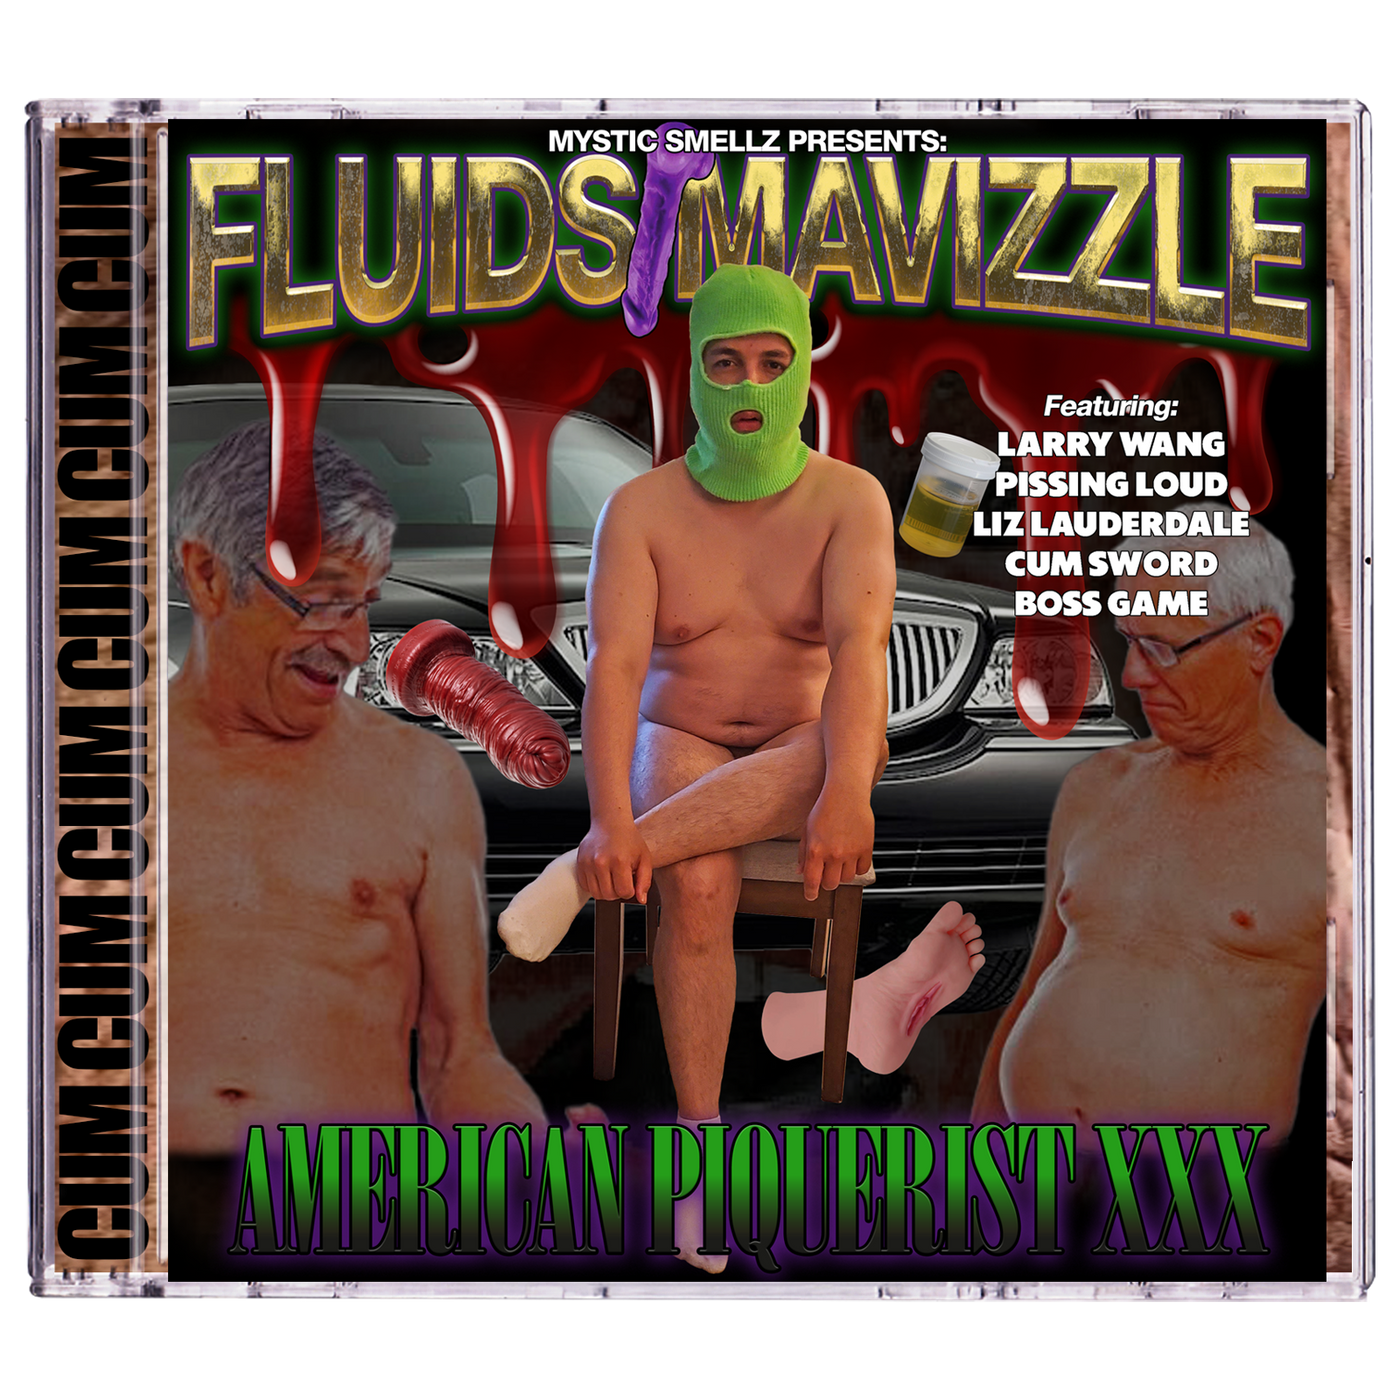 Fluids x Mavizzle 'American Piquerist XXX' CD